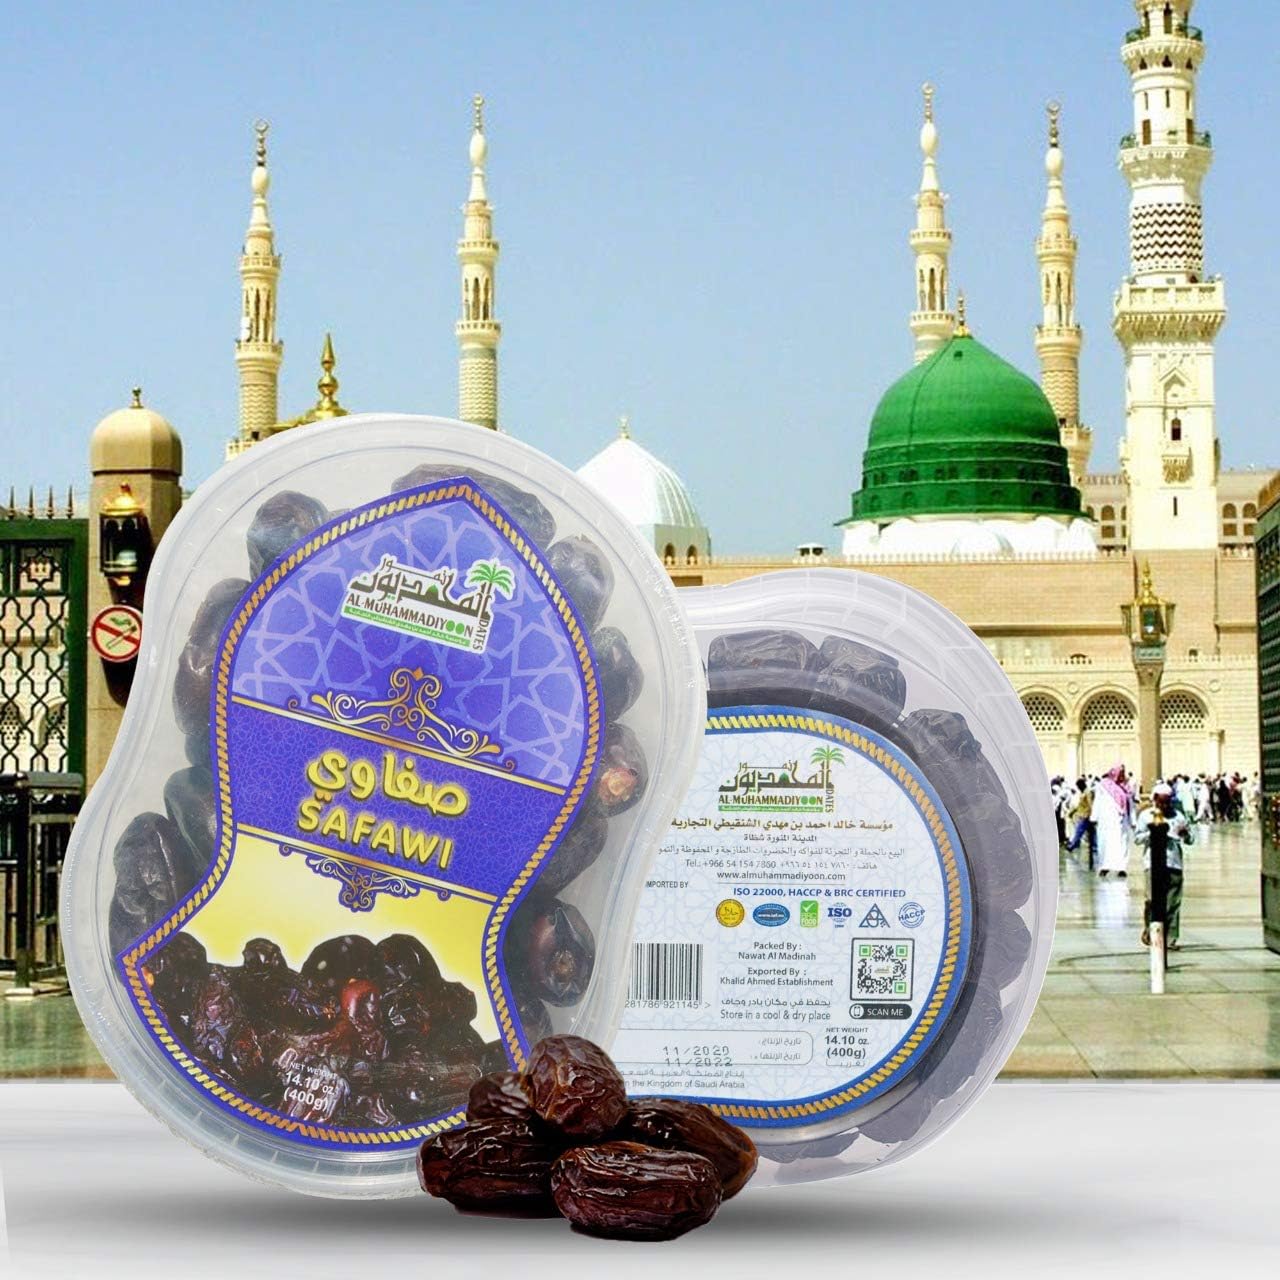 Almuhammadiyoon Safawi Dates Pack | Al Madina Dates | Best breakfast | Saudi dates |100% Fresh | Naturally Sweet| Dates gift box | 400g